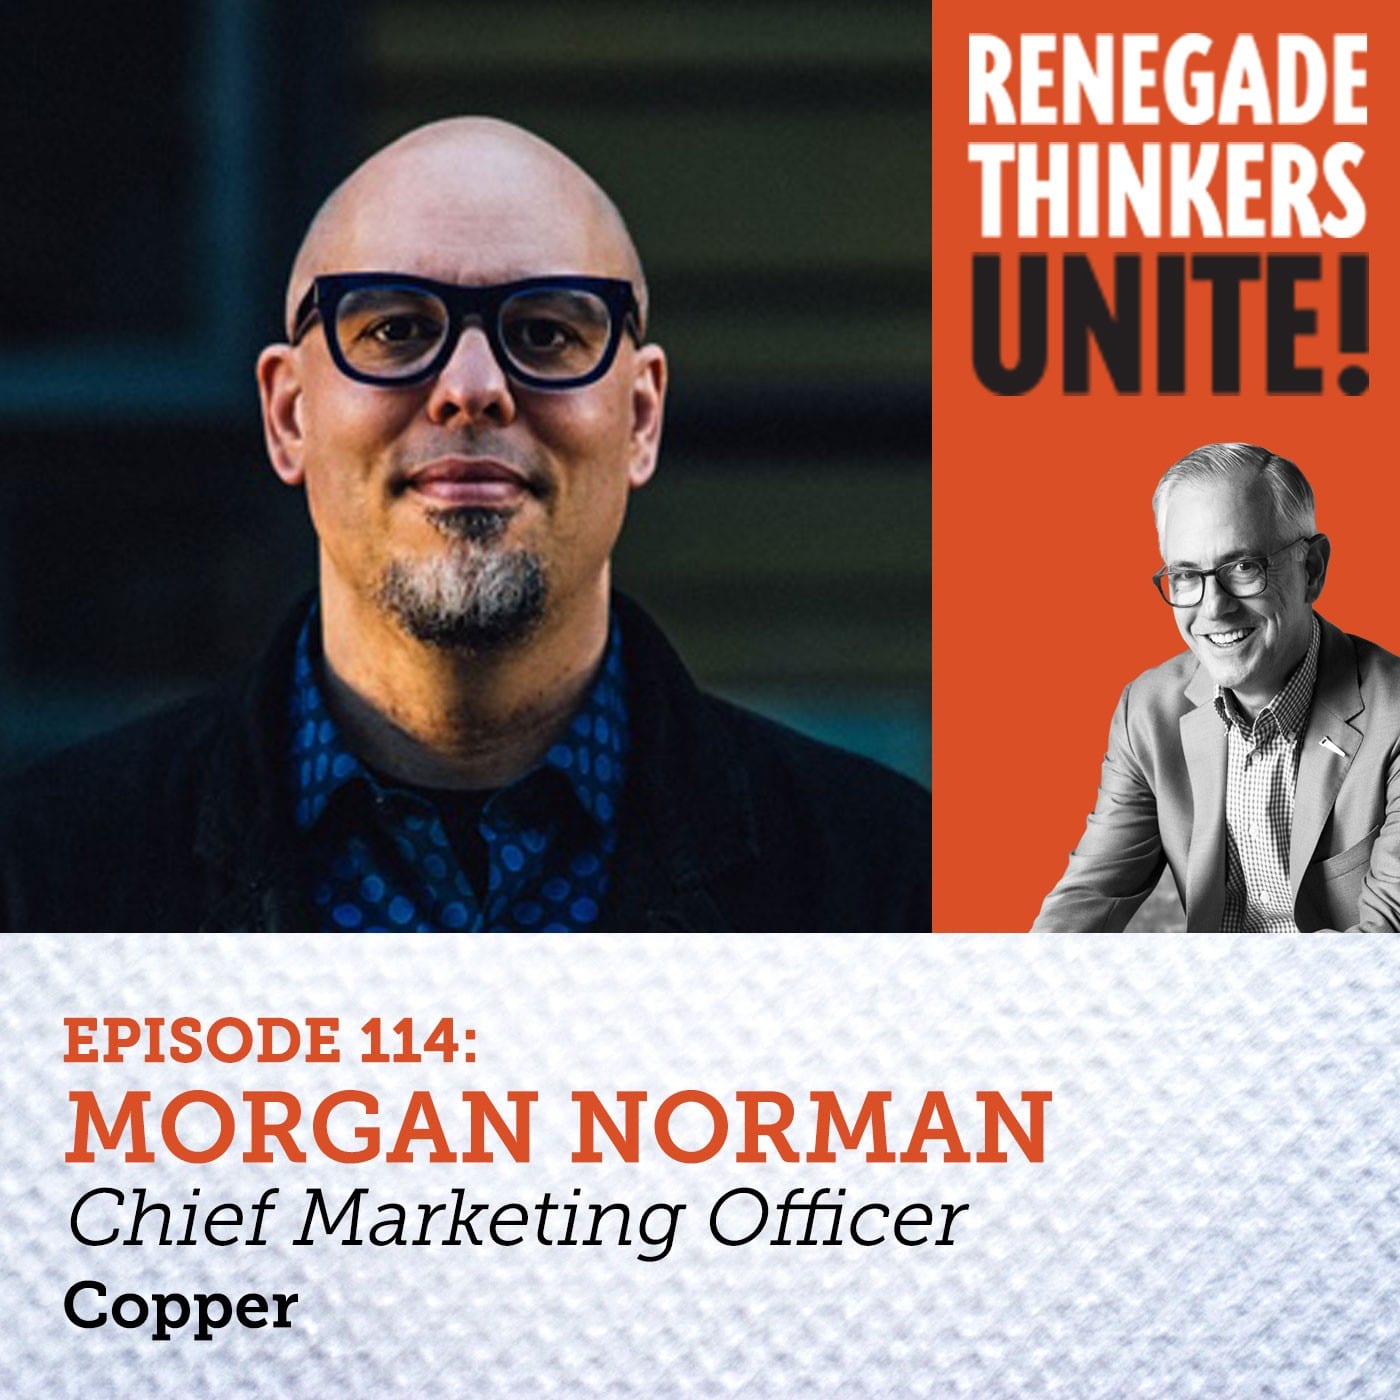 Morgan Norman